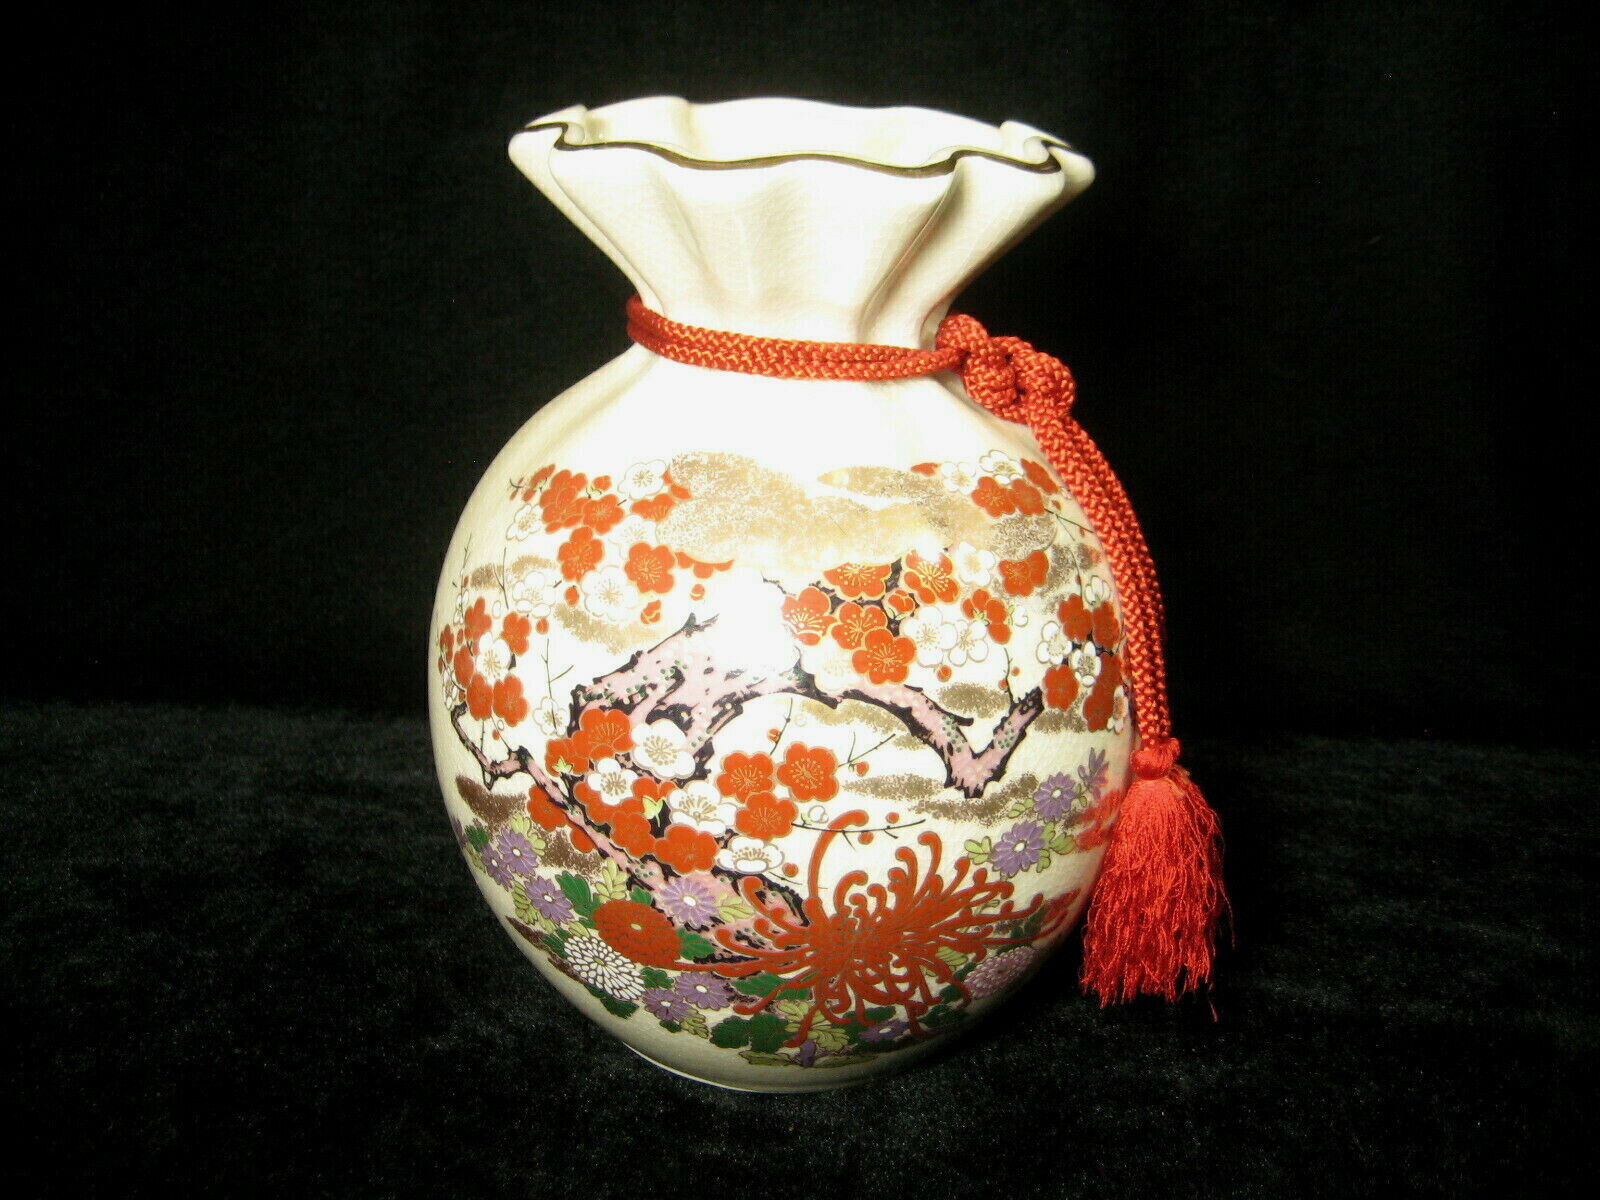 Vintage Japanese Decorative Porcelain Flower Vase Sakura Cherry Blossom